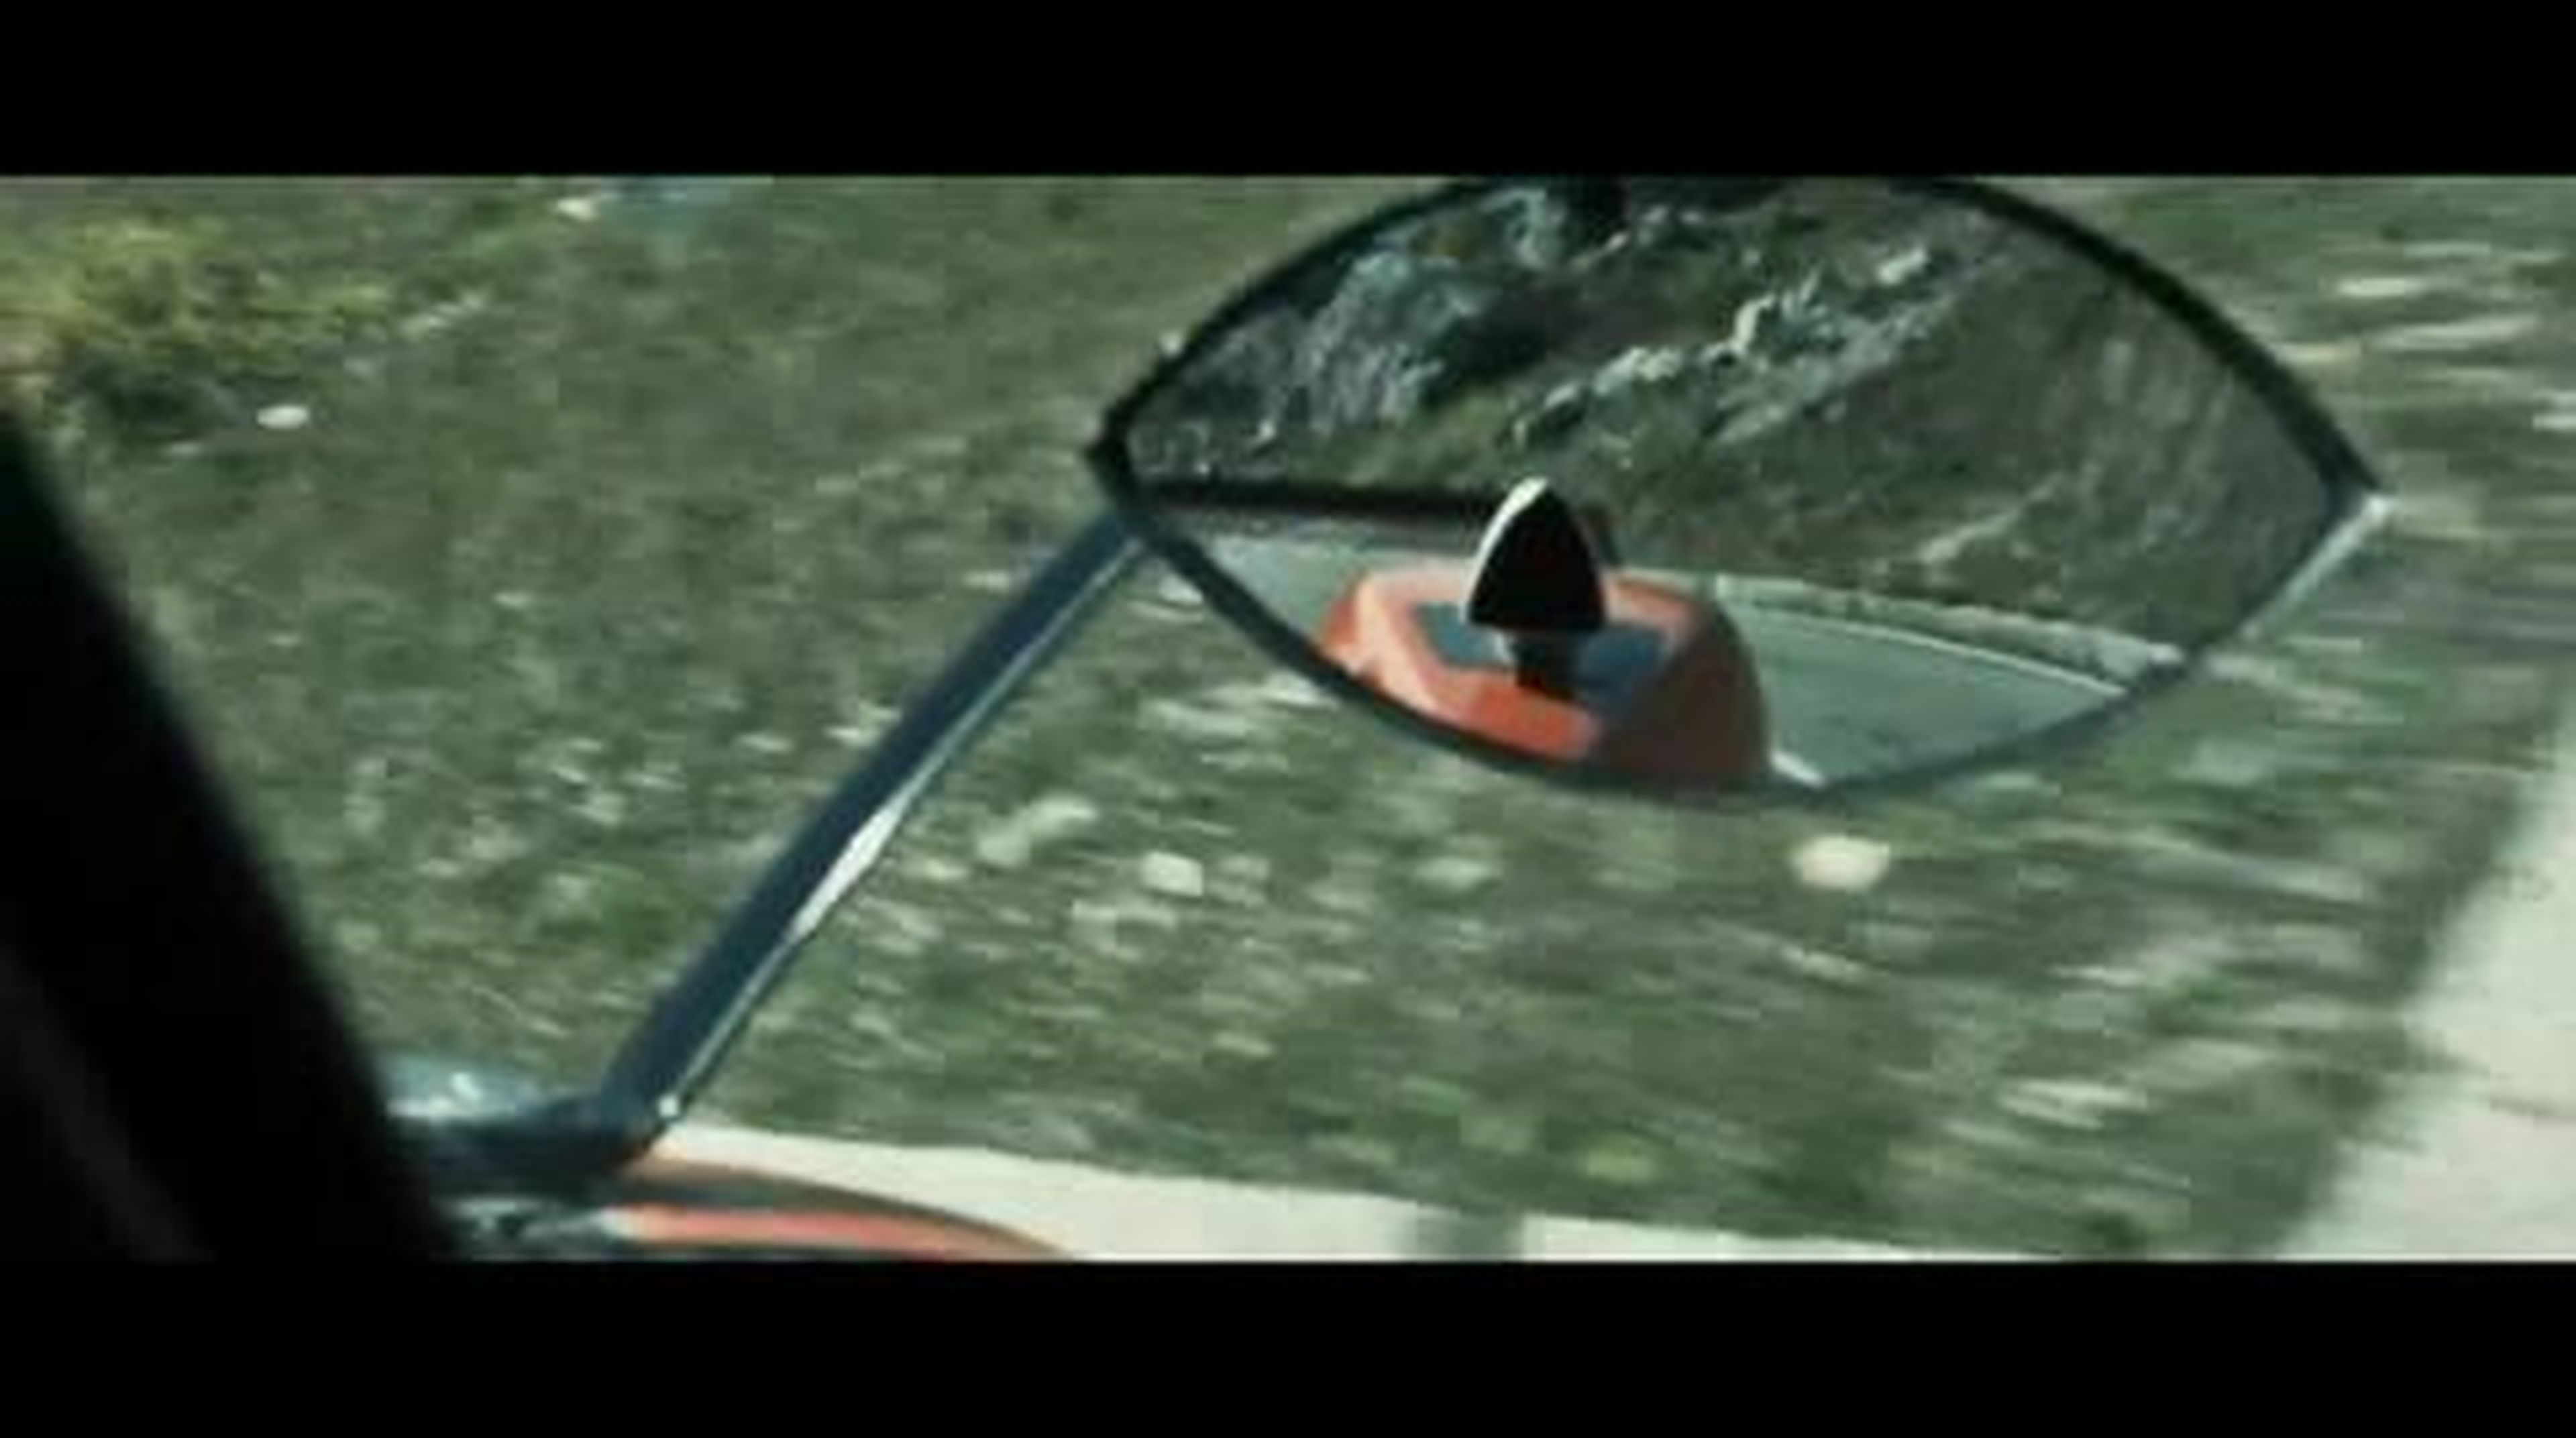 NfS Hot Pursuit - Pagani contra Lamborghini en Hobbynews.es